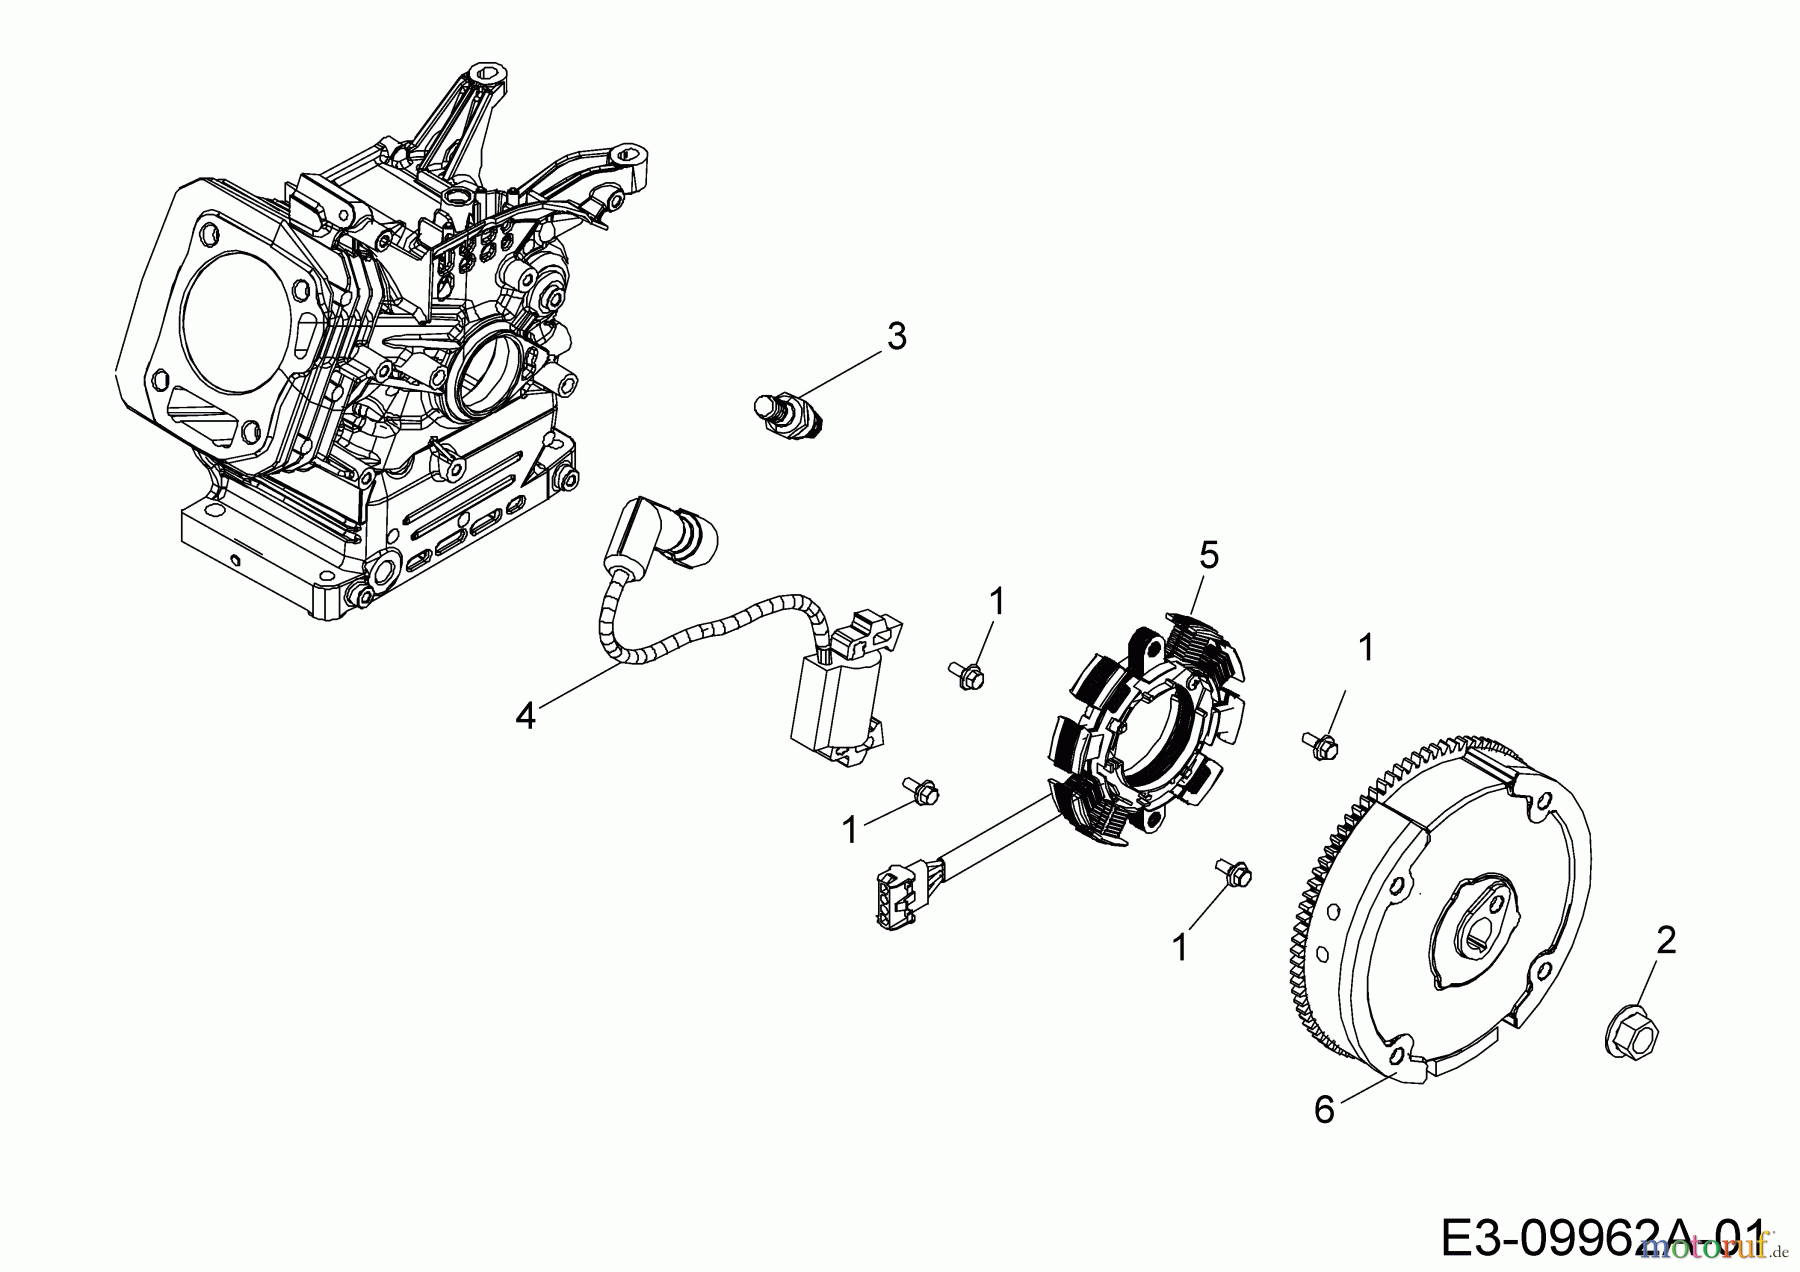  MTD-Engines Horizontal 670-JH 752Z670-JH  (2017) Flywheel, Ignition